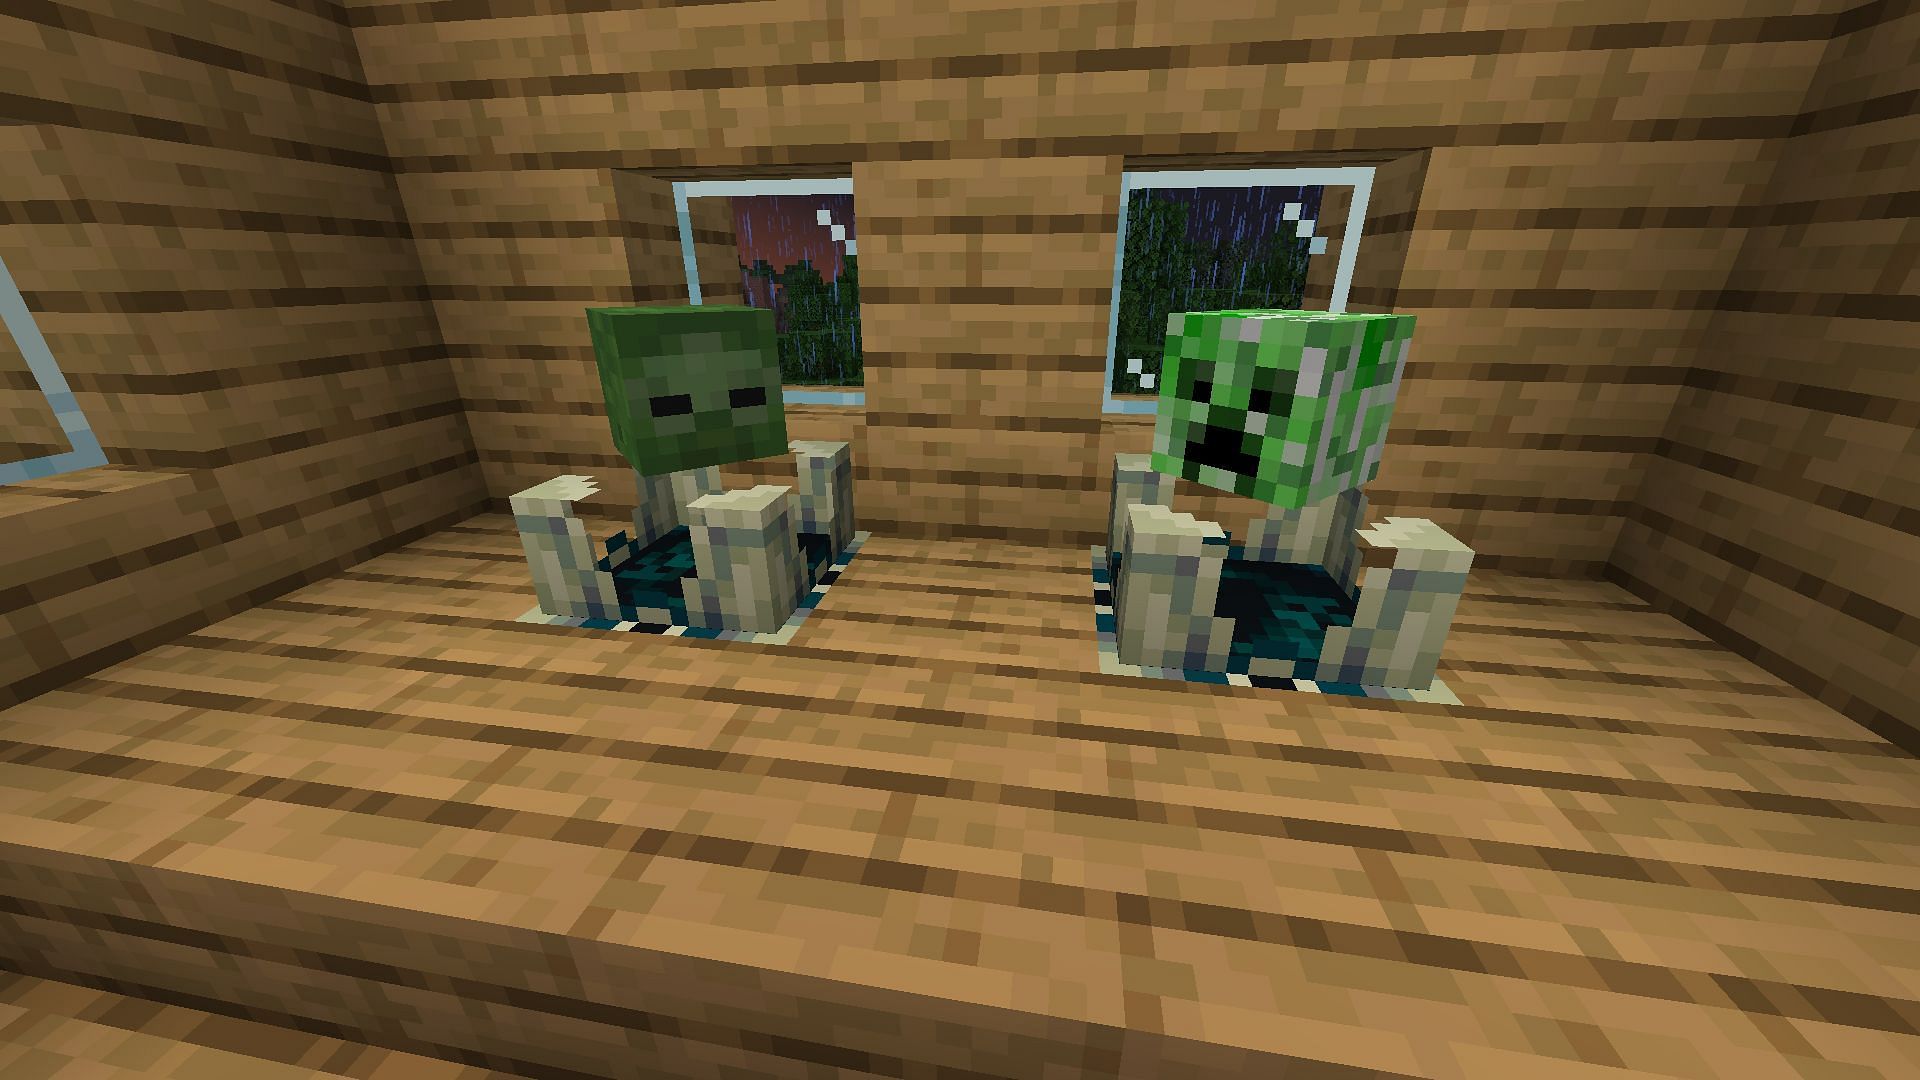 Sculk shriekers used as a head display (Image via Minecraft 1.19 update)